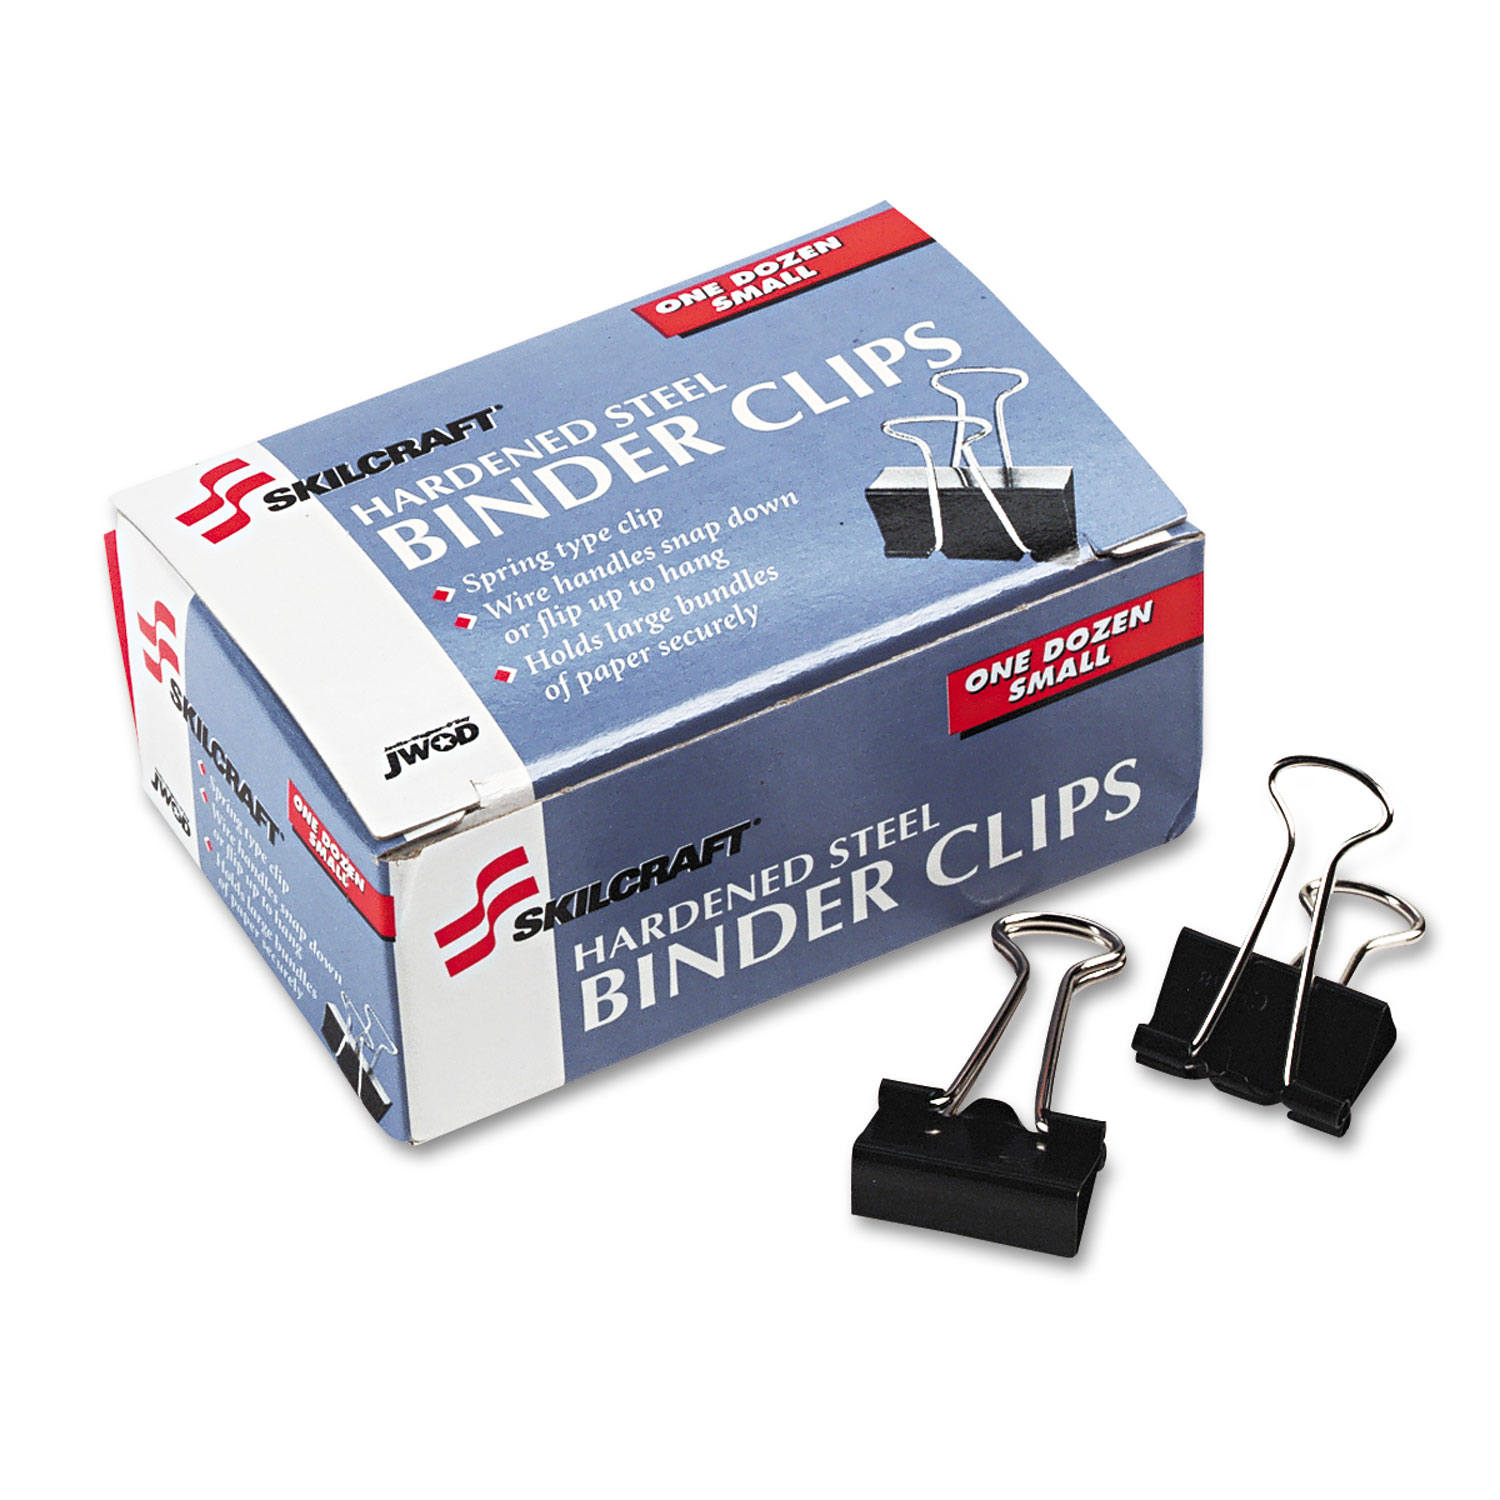 Charles Leonard Binder Clips - Black Small 12Ct Box Reusable BoxMFG# 79312